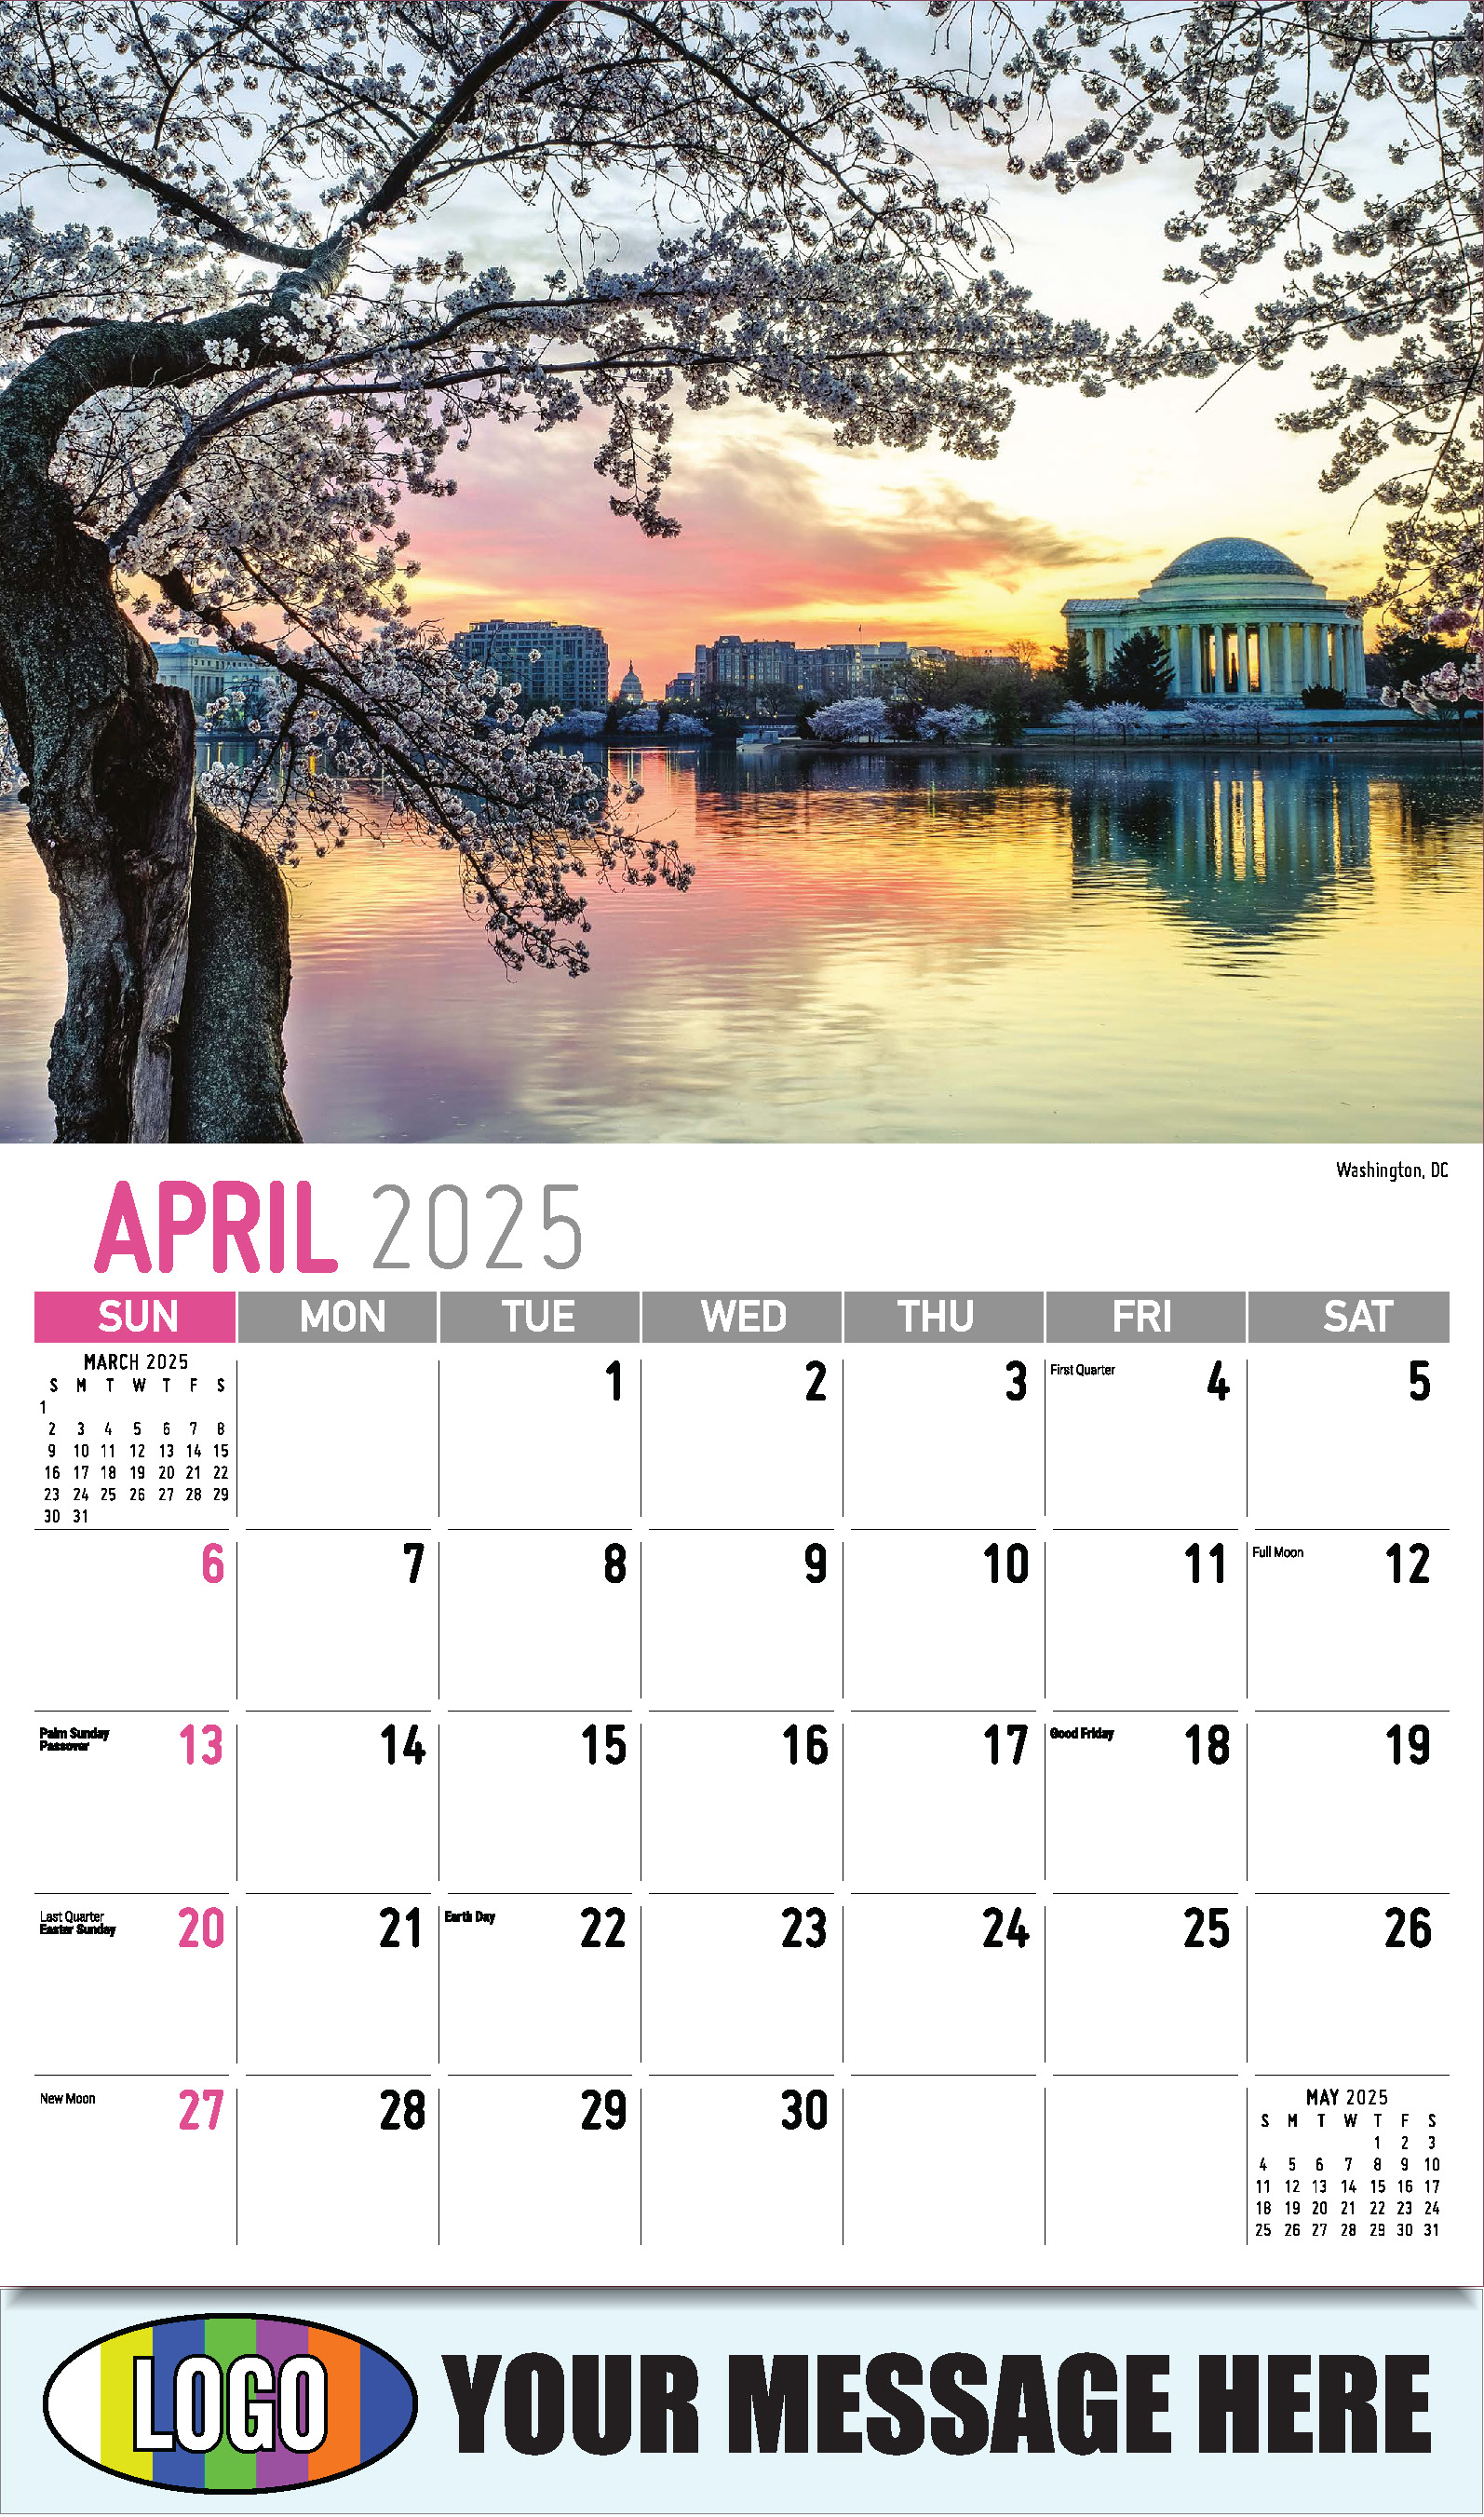 Scenes of America 2025 Business Advertising Wall Calendar - April